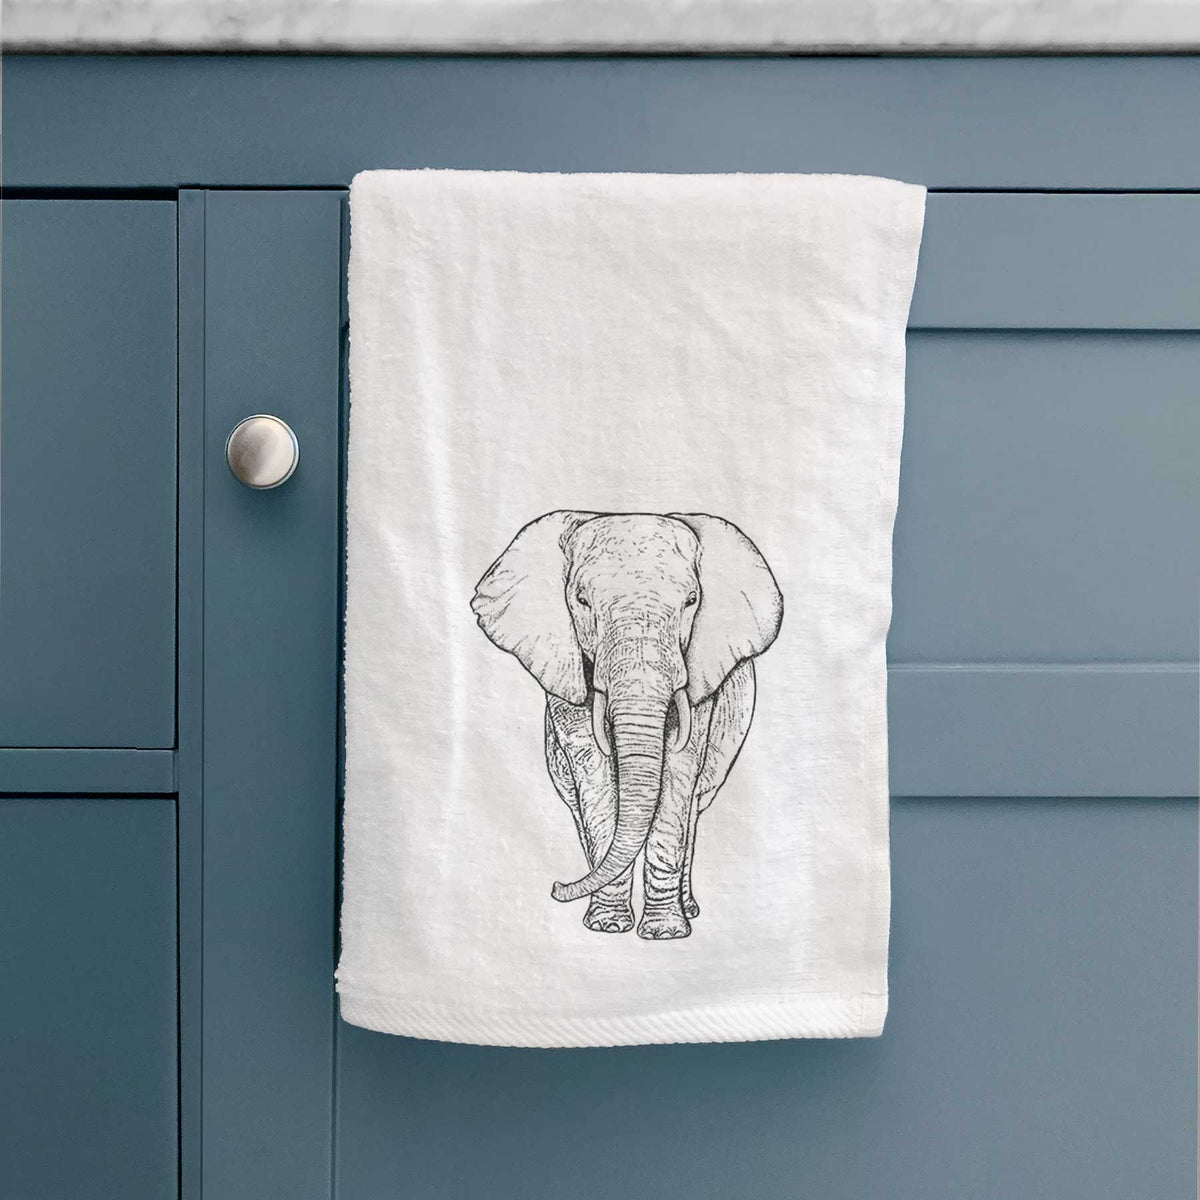 Loxodonta africana - African Elephant Hand Towel